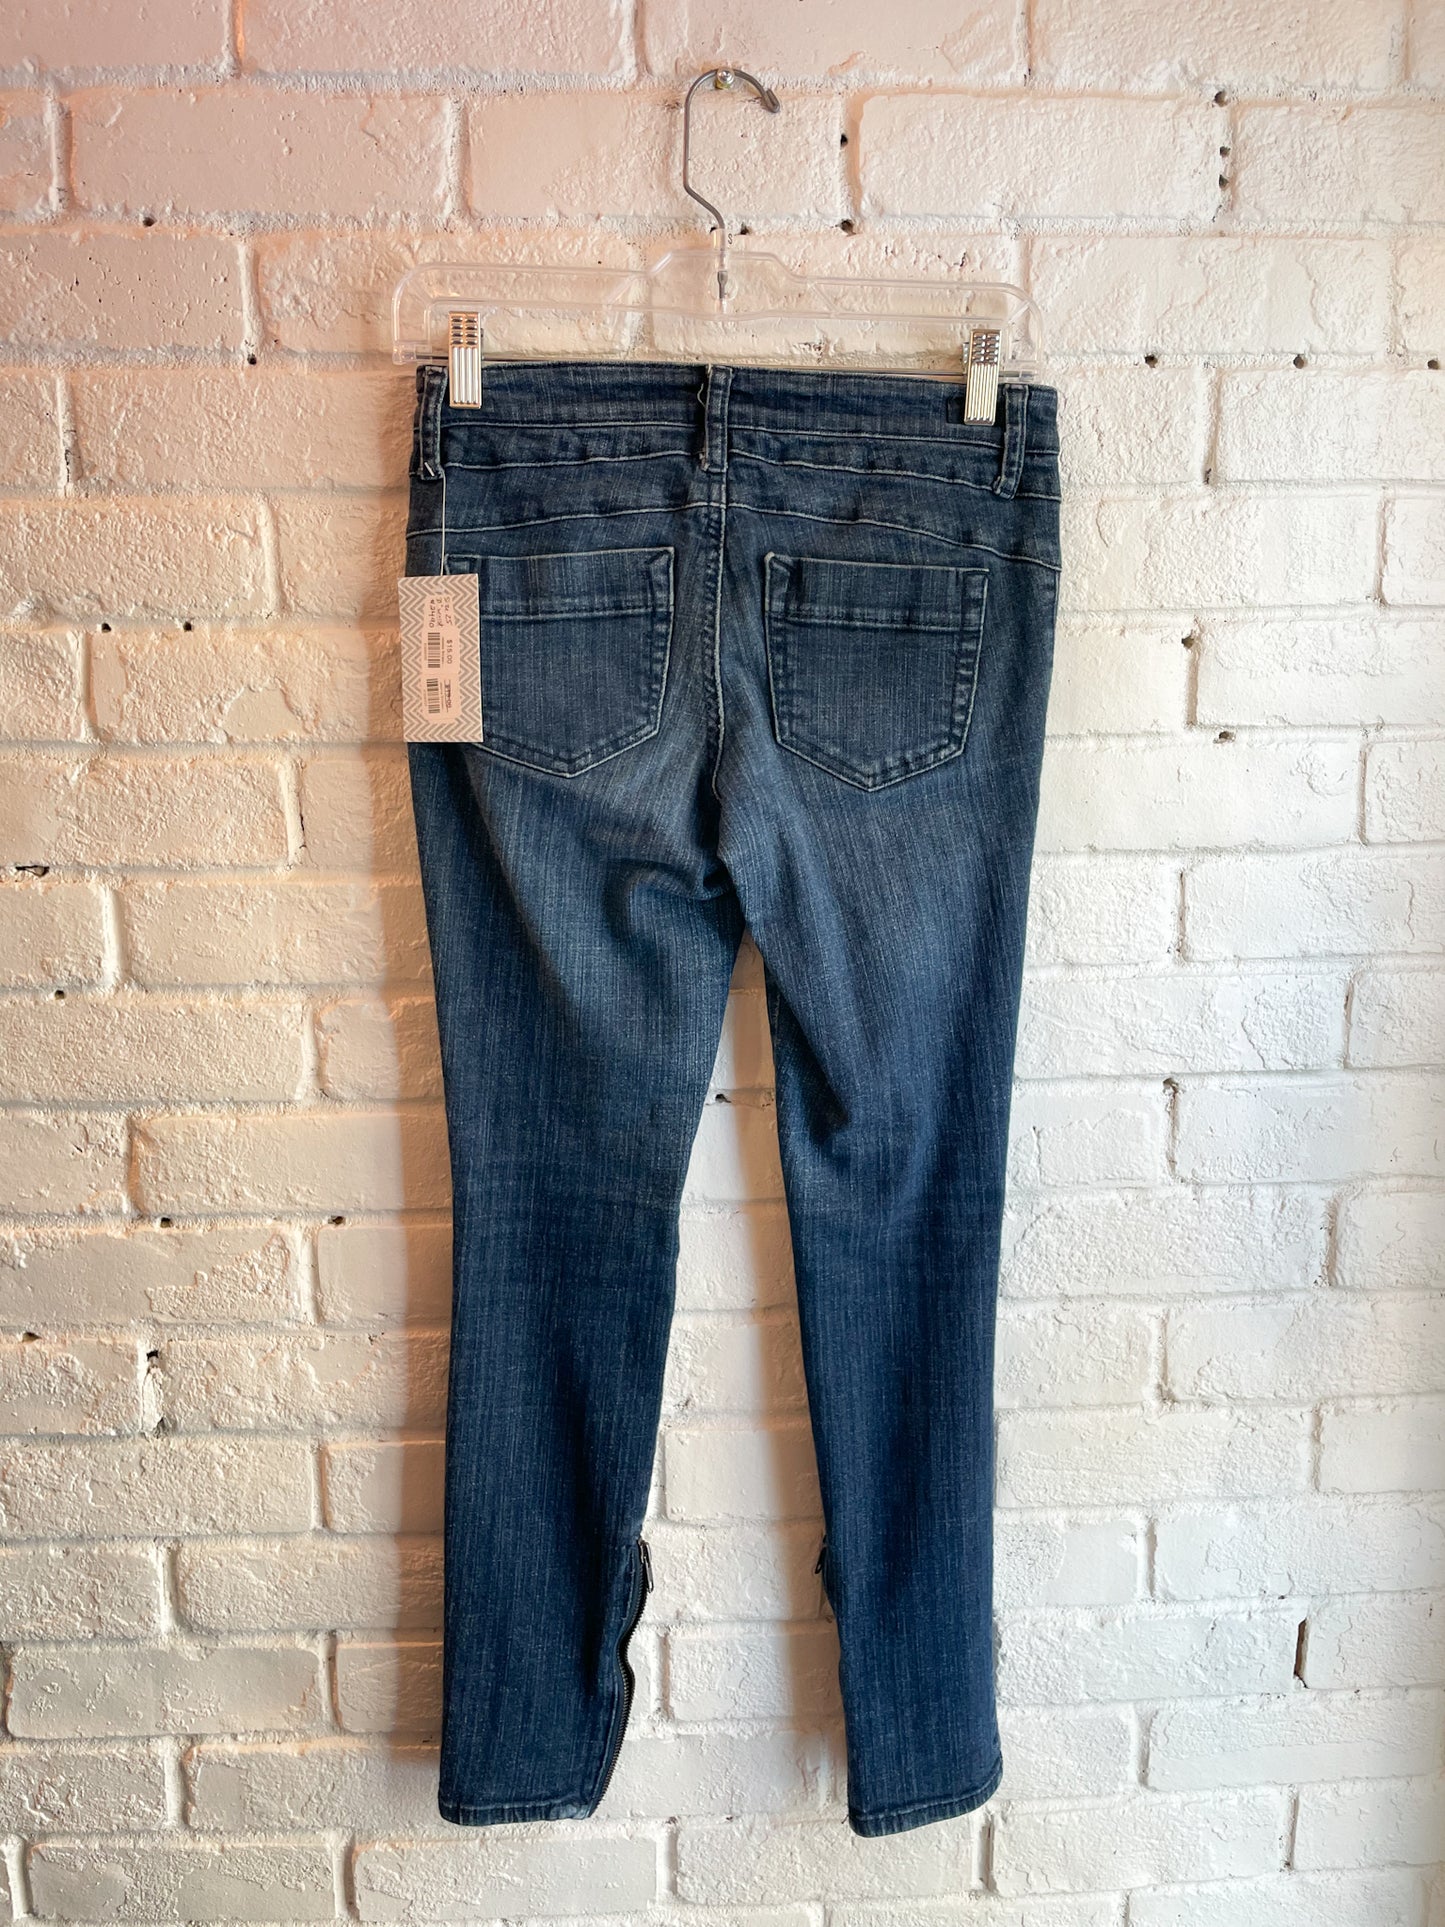 Jessica Simpson Dark Wash Zipper Split Hem Jeans  - Size 25/26